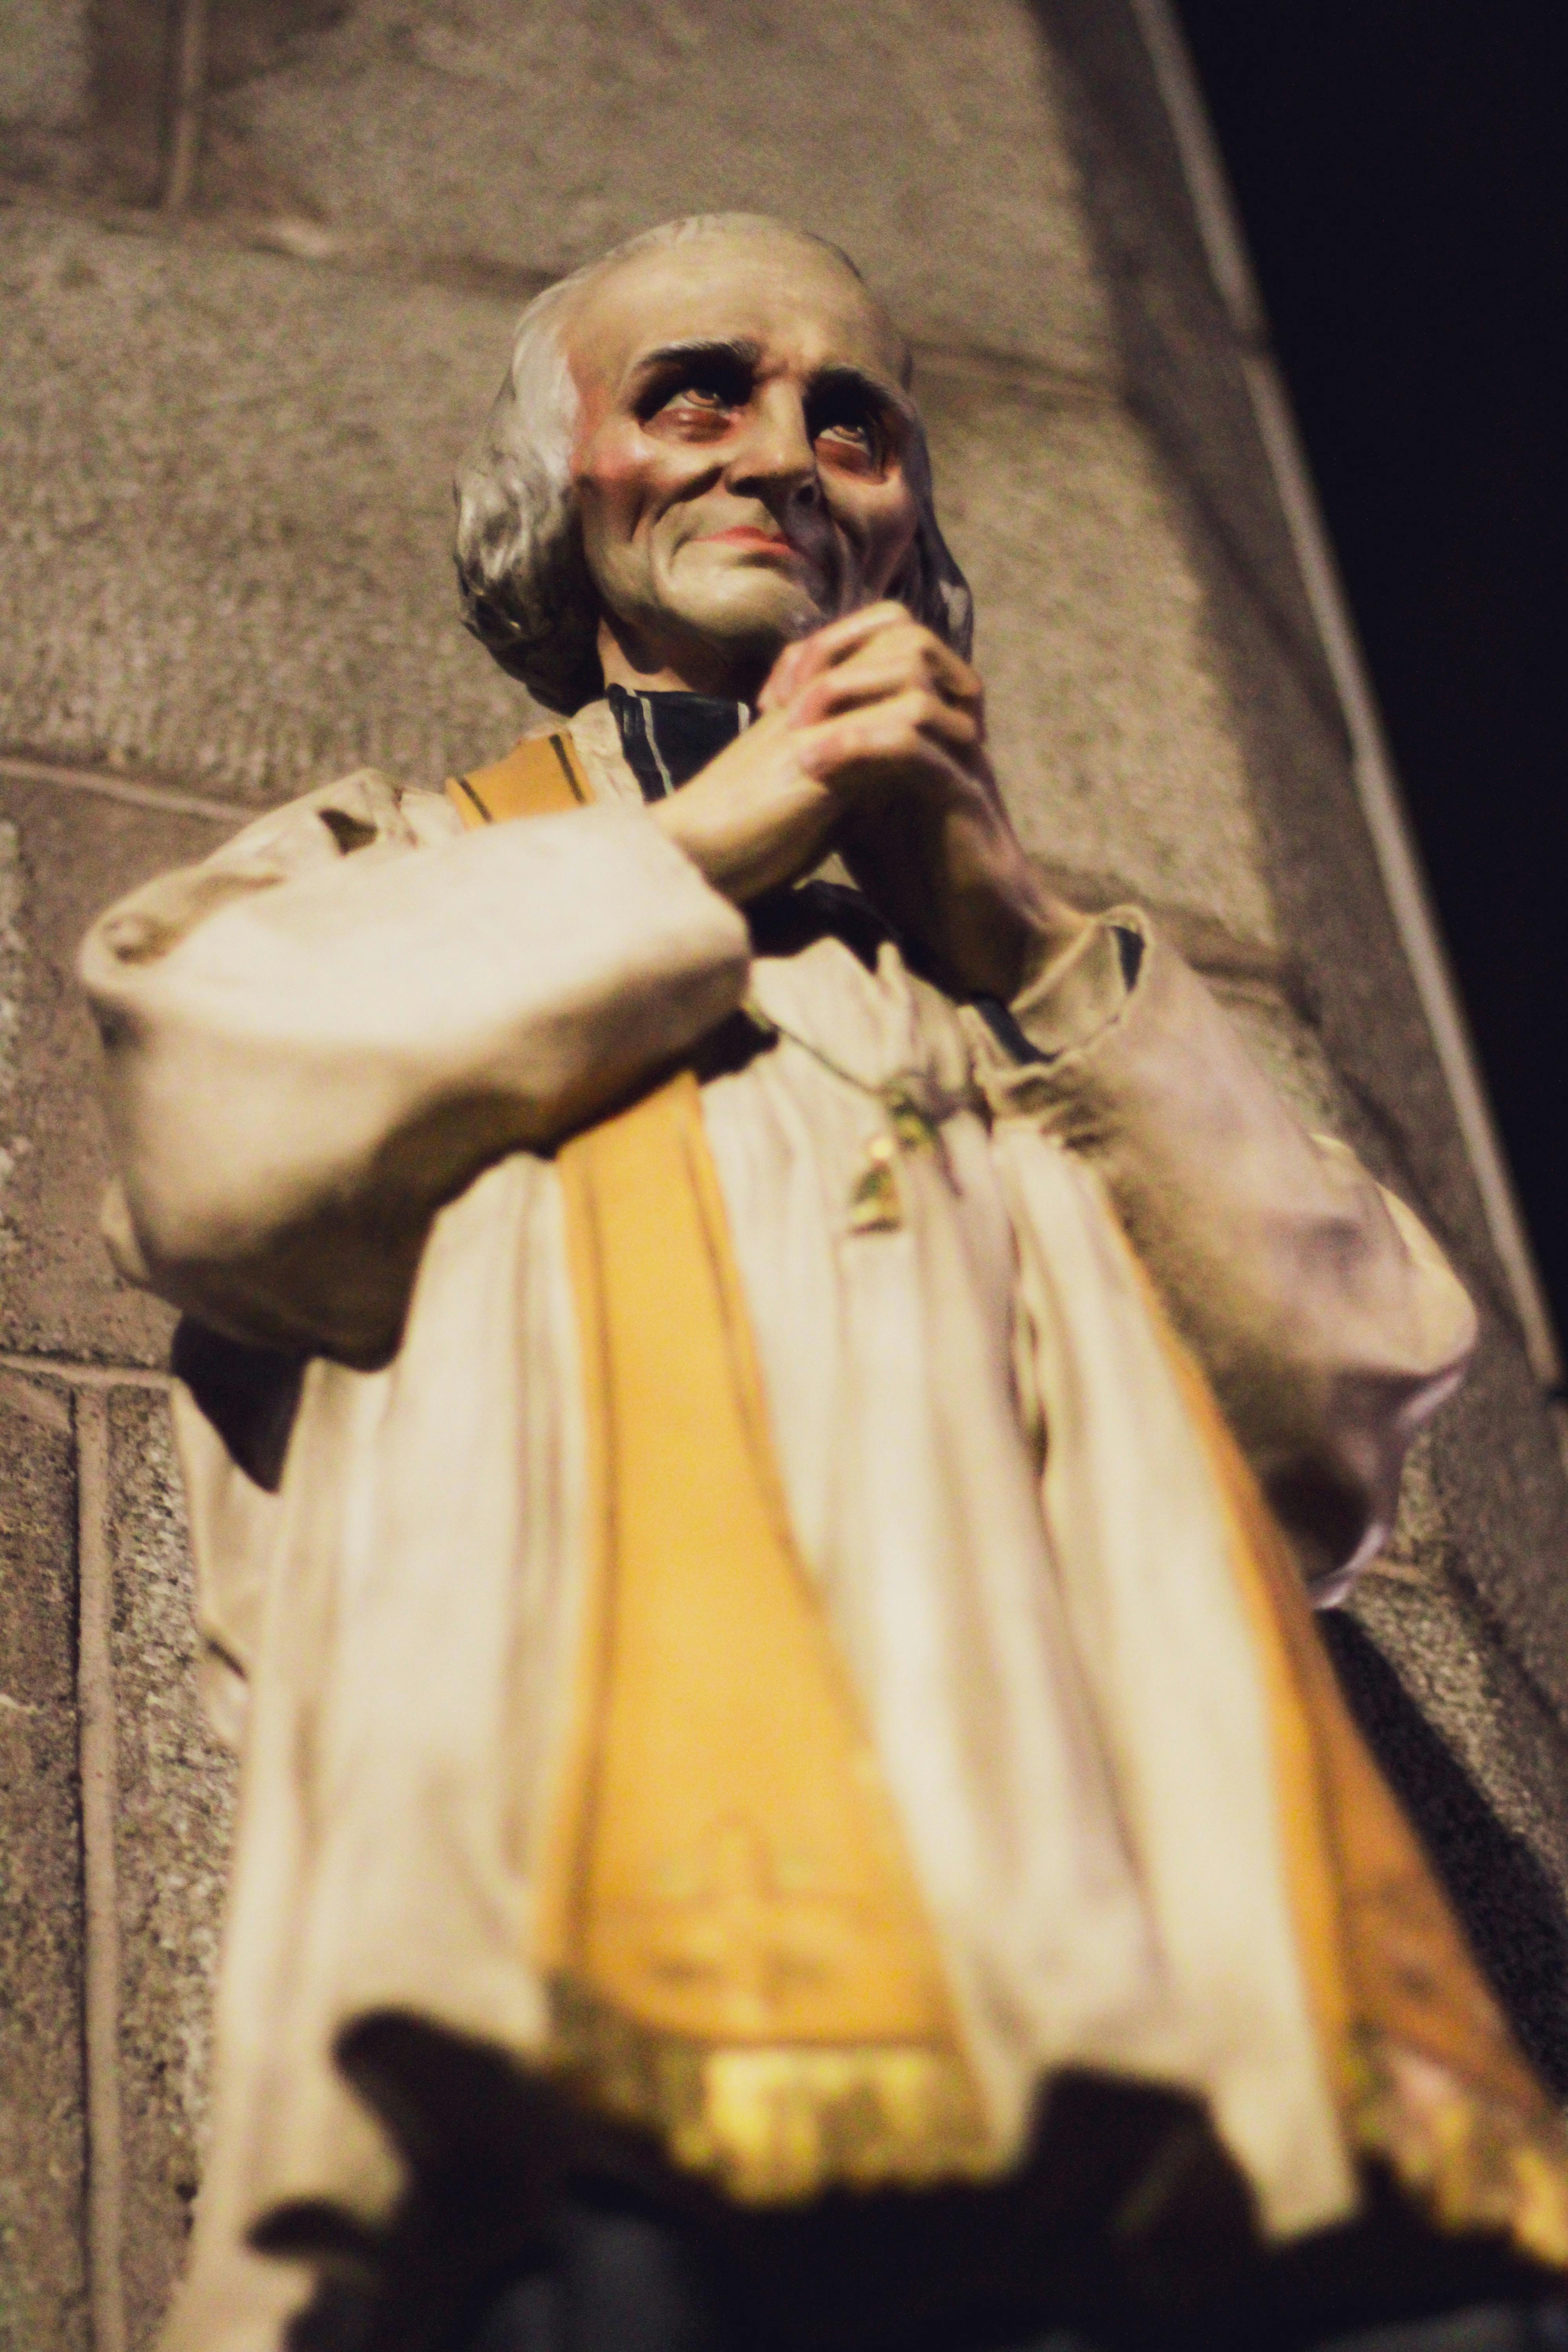 A statue of a priest